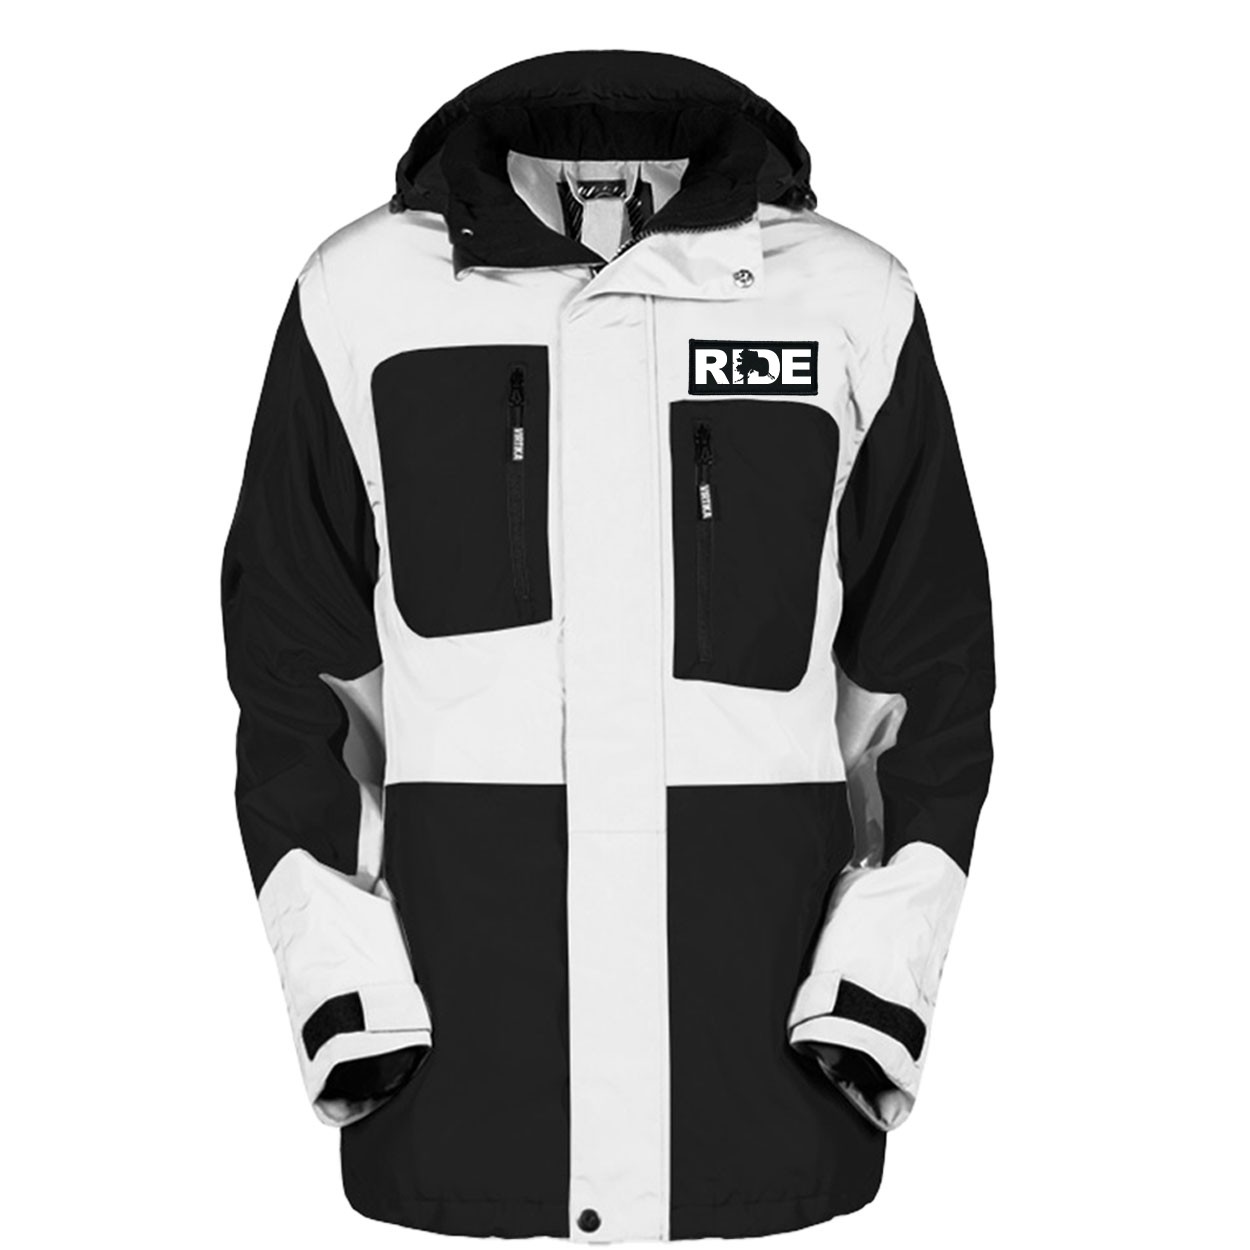 Ride Alaska Pro Waterproof Breathable Winter Virtika Jacket Black/White (White Logo)